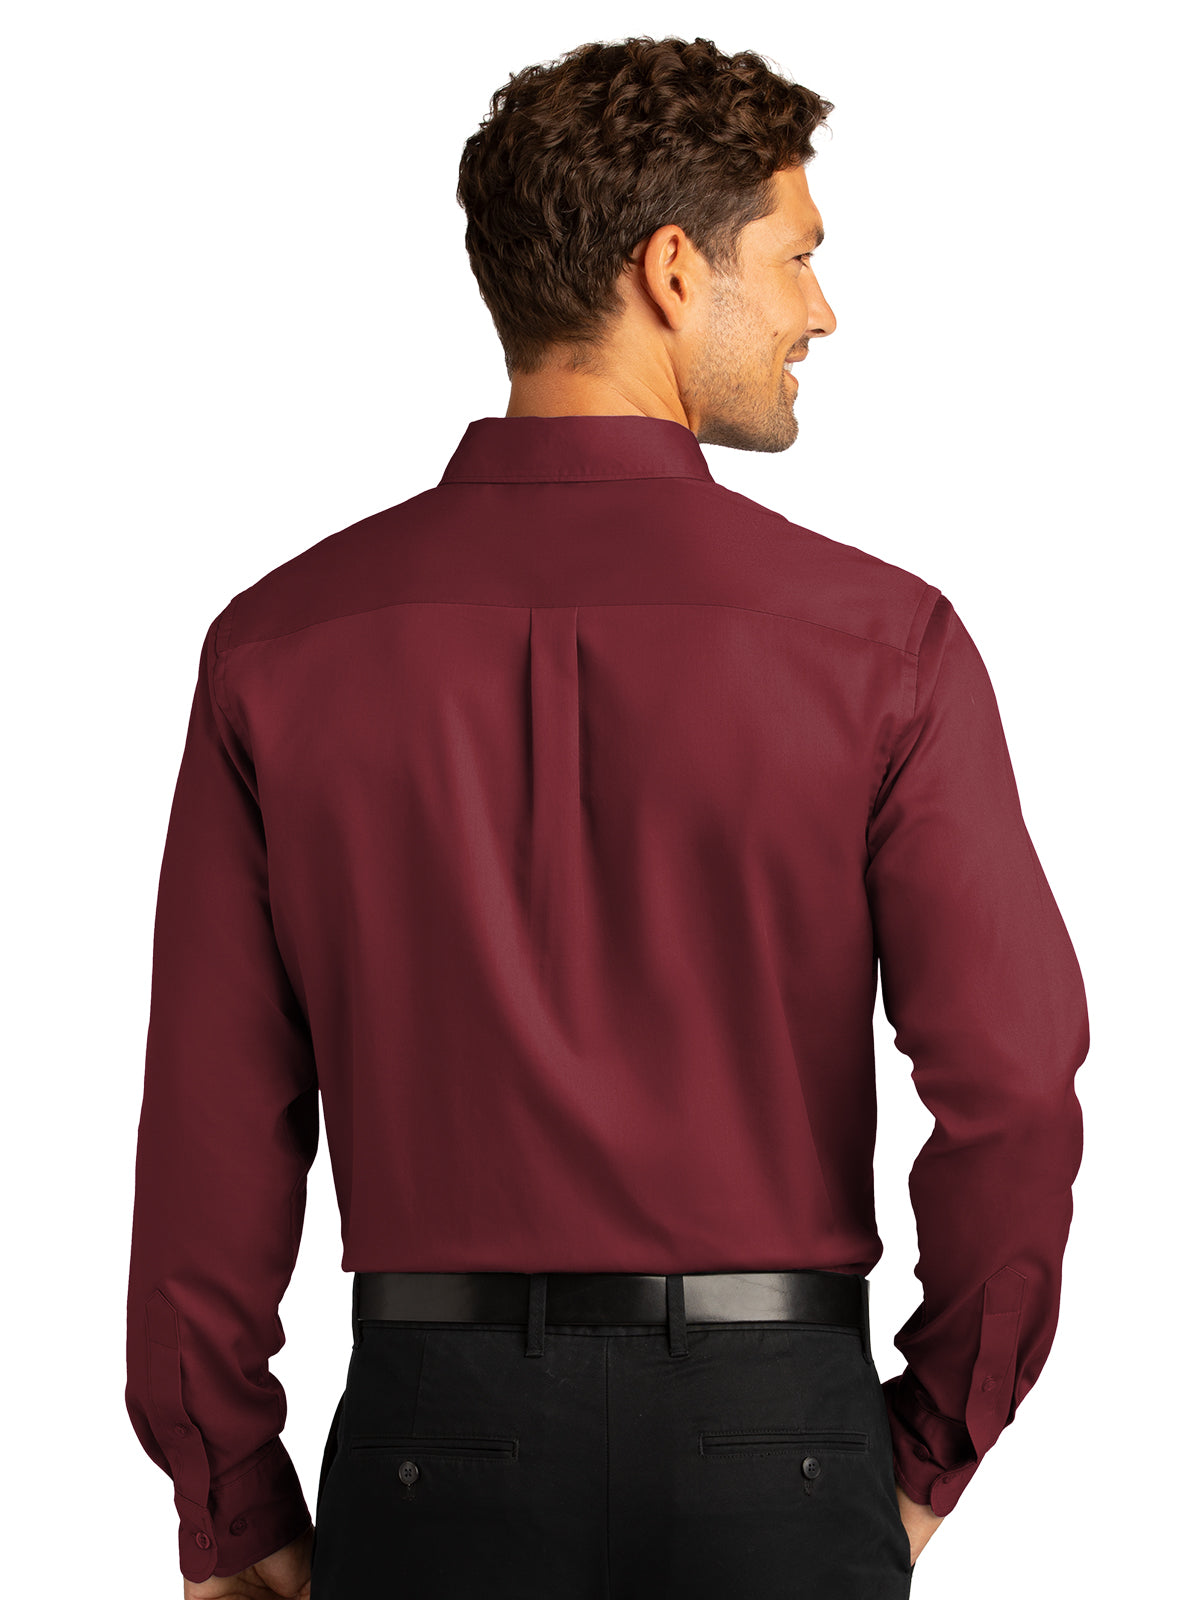 Long Sleeve Button Up Performance Shirt